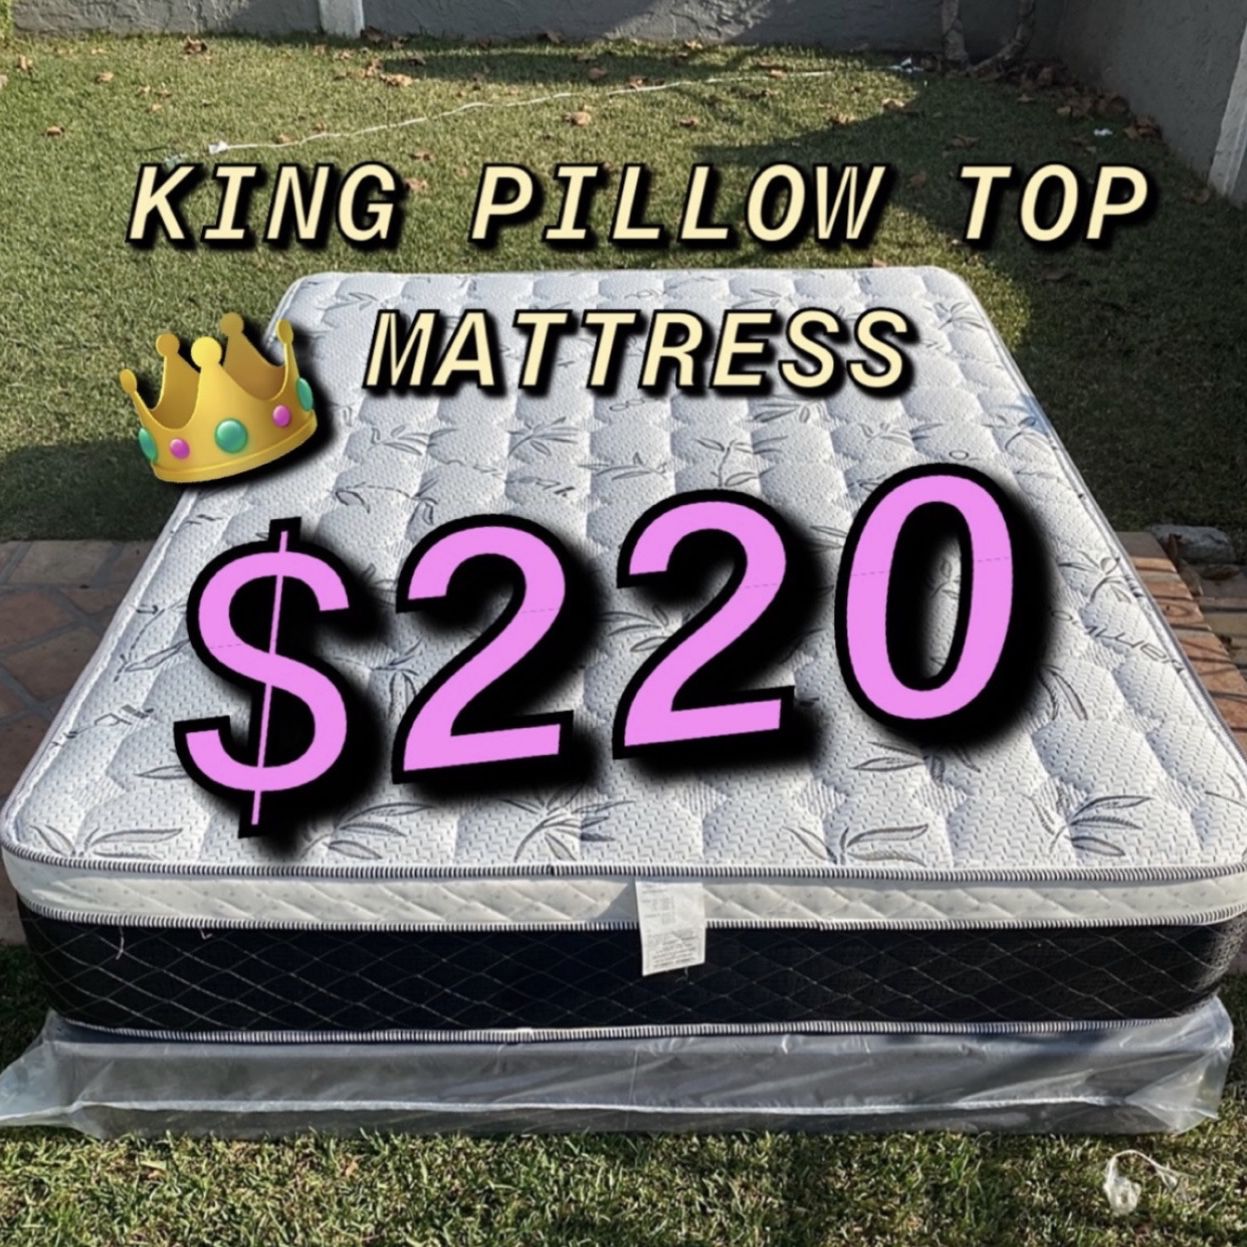 New King Mattress Only $220